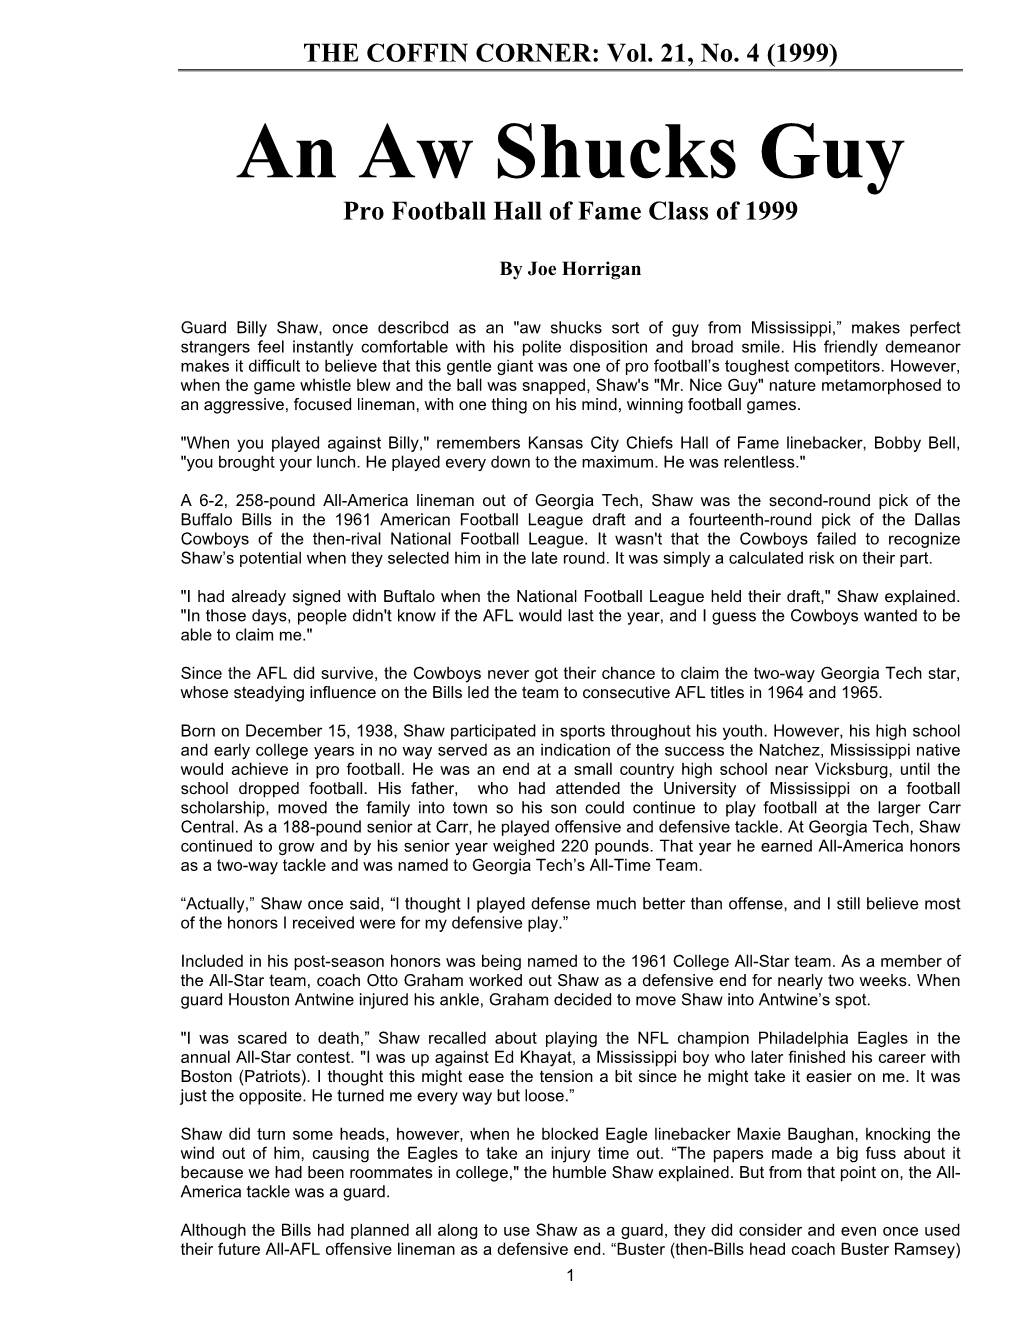 An Aw Shucks Guy: Billy Shaw